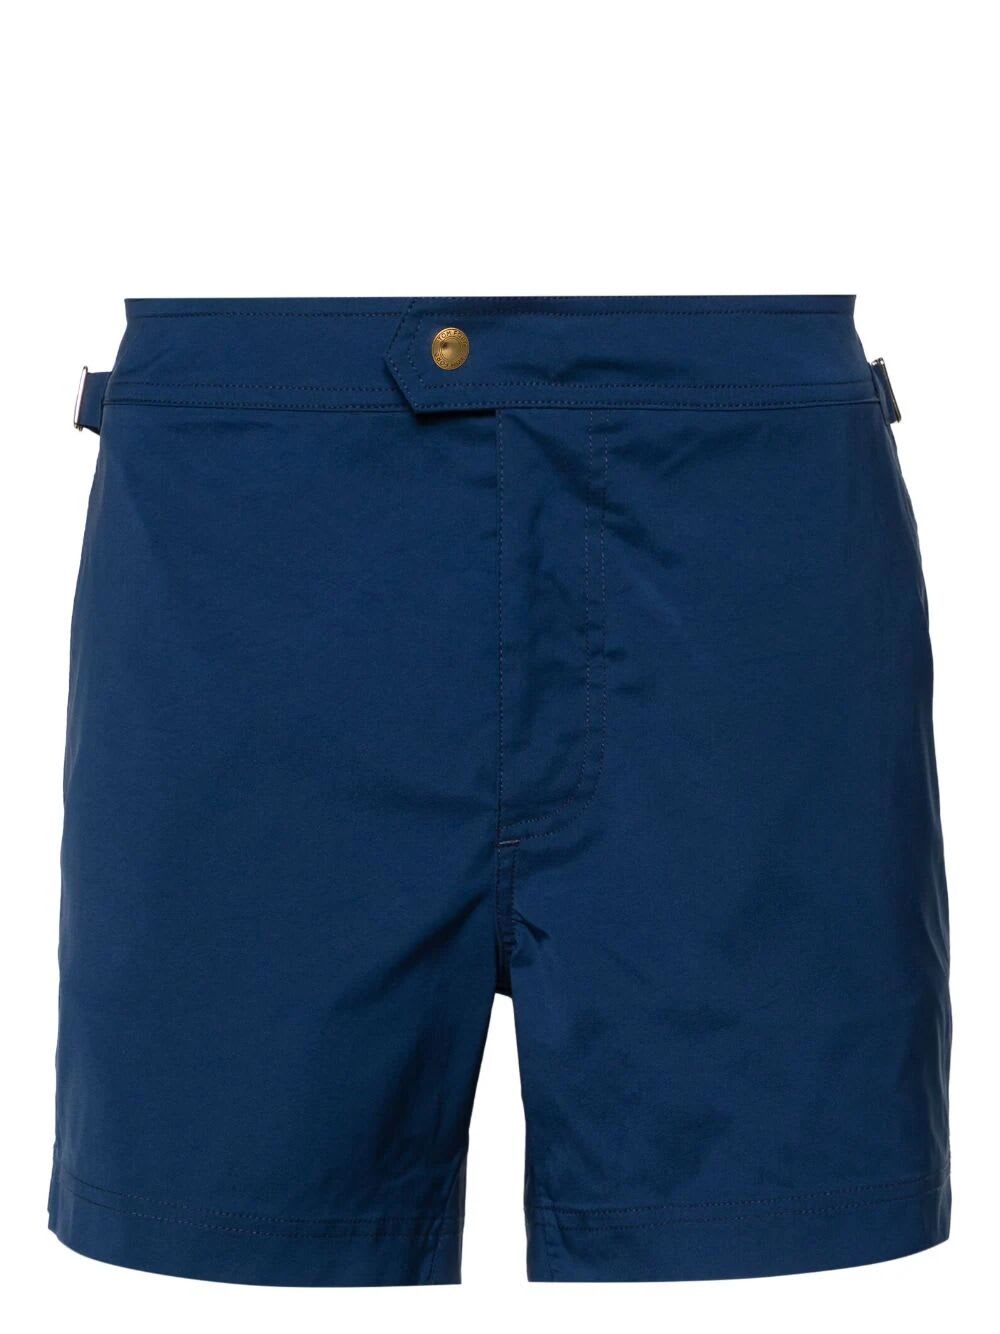 Tom Ford Swimwear Shorts In Yves Blue